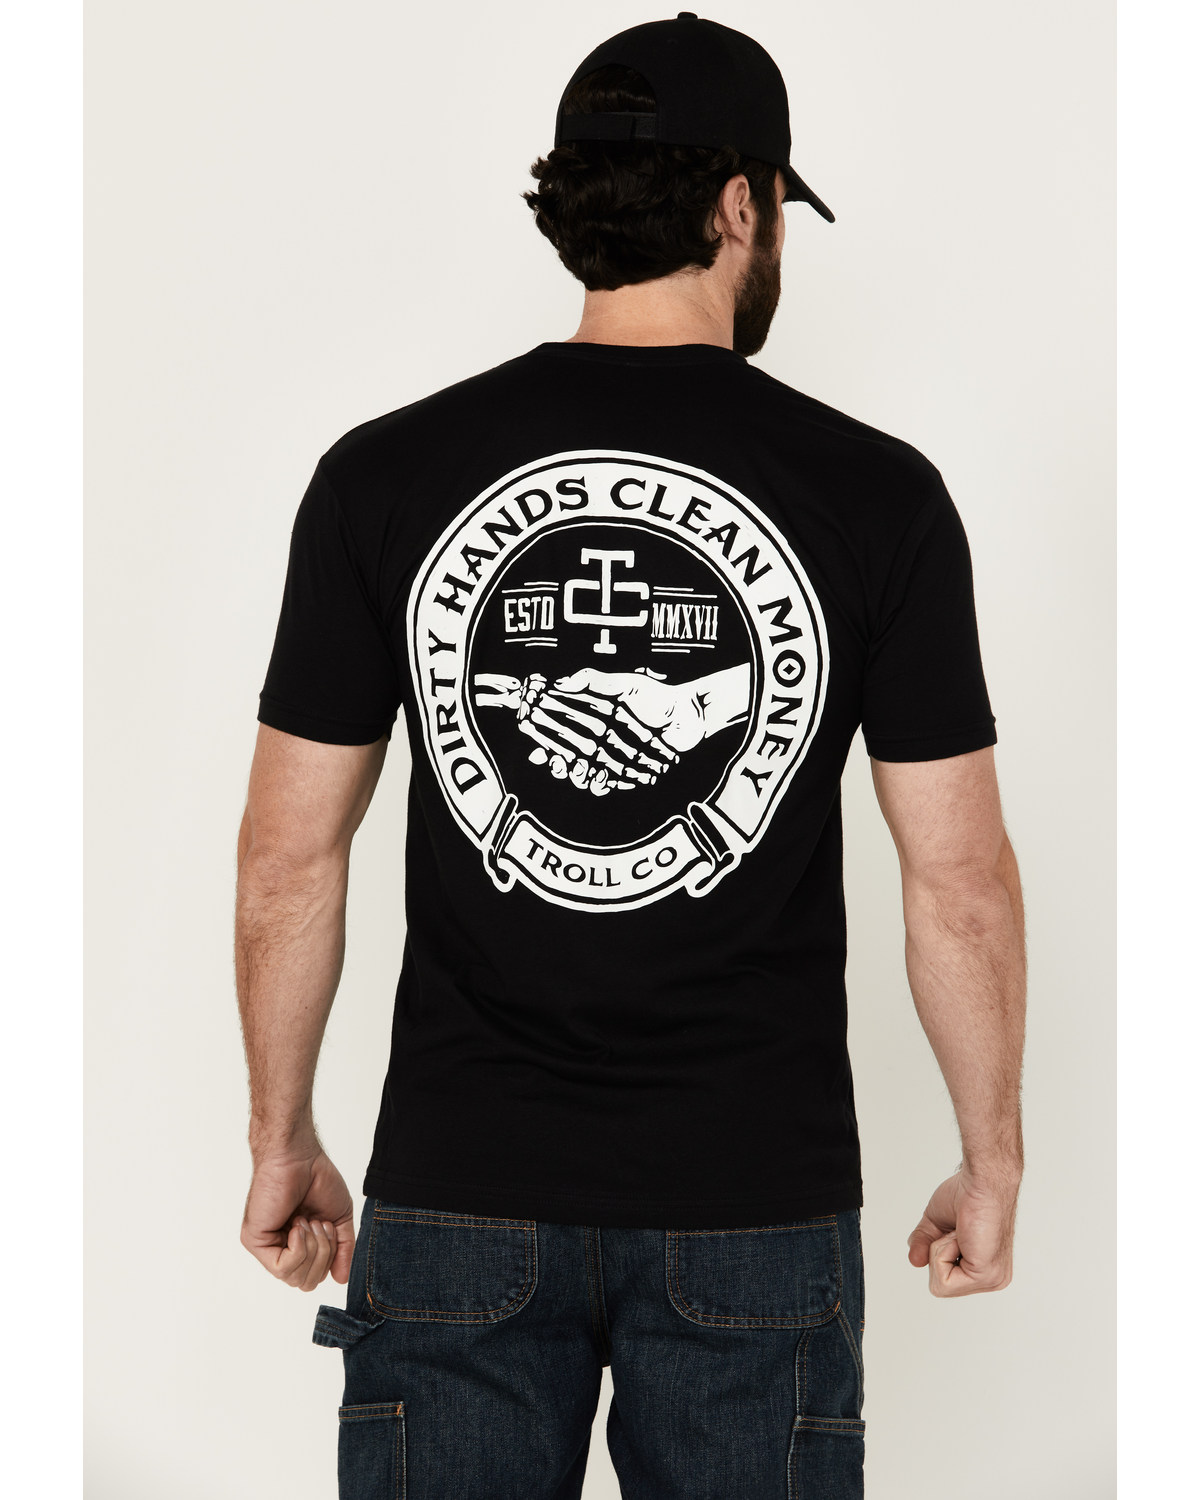 Troll Co Men's Haggler Short Sleeve Graphic T-Shirt